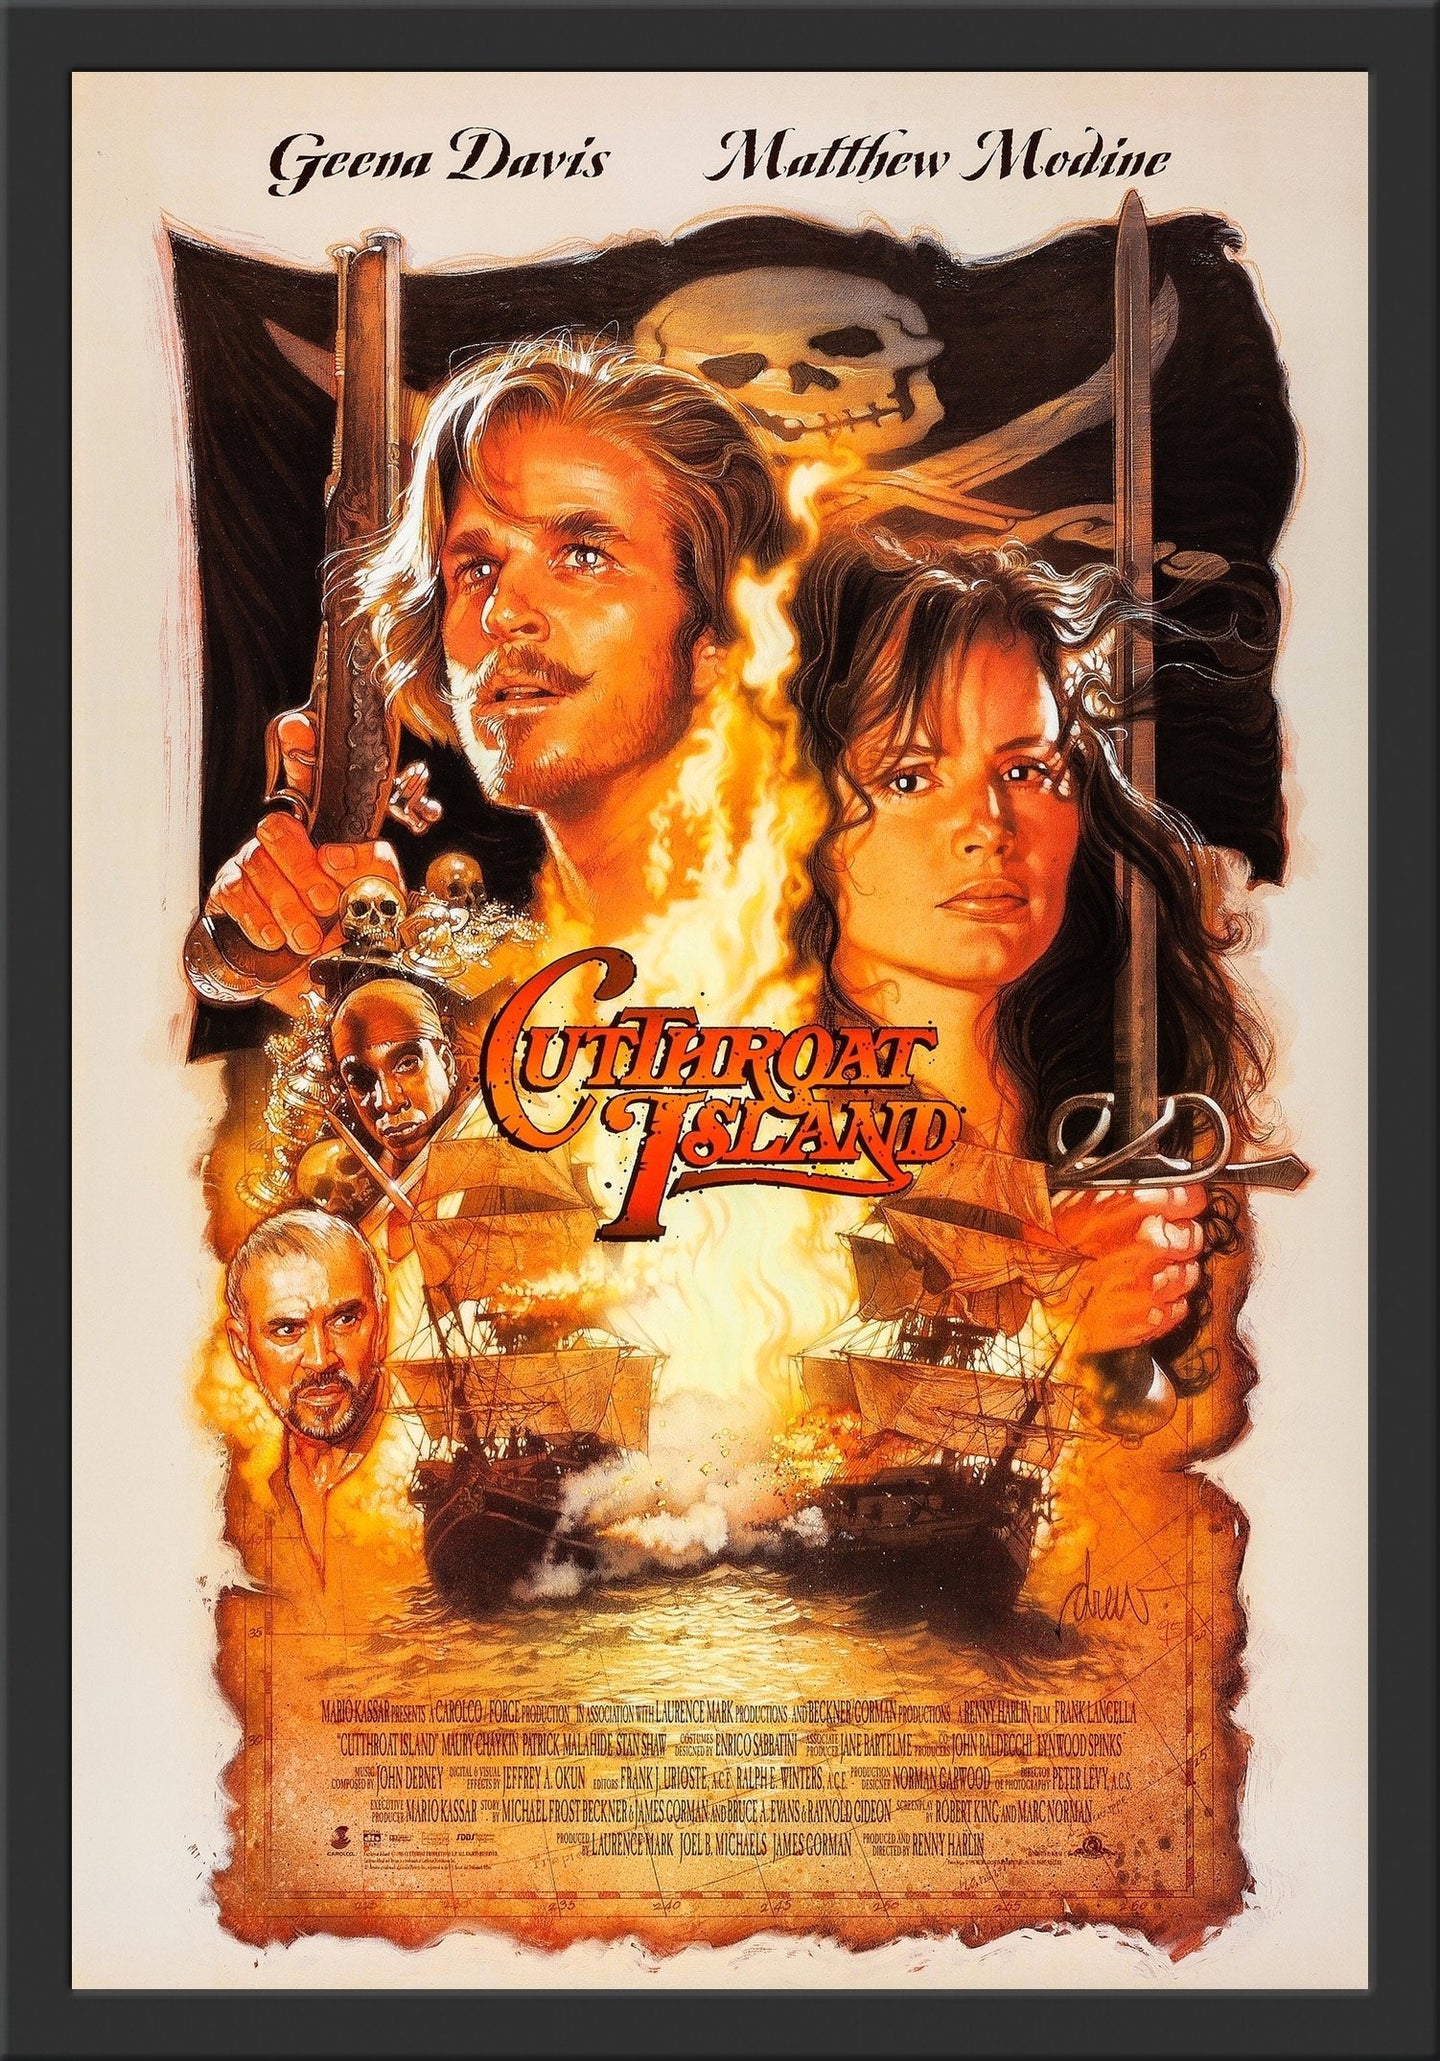 An original movie poster by Drew Struzan for the film Cutthroat Island